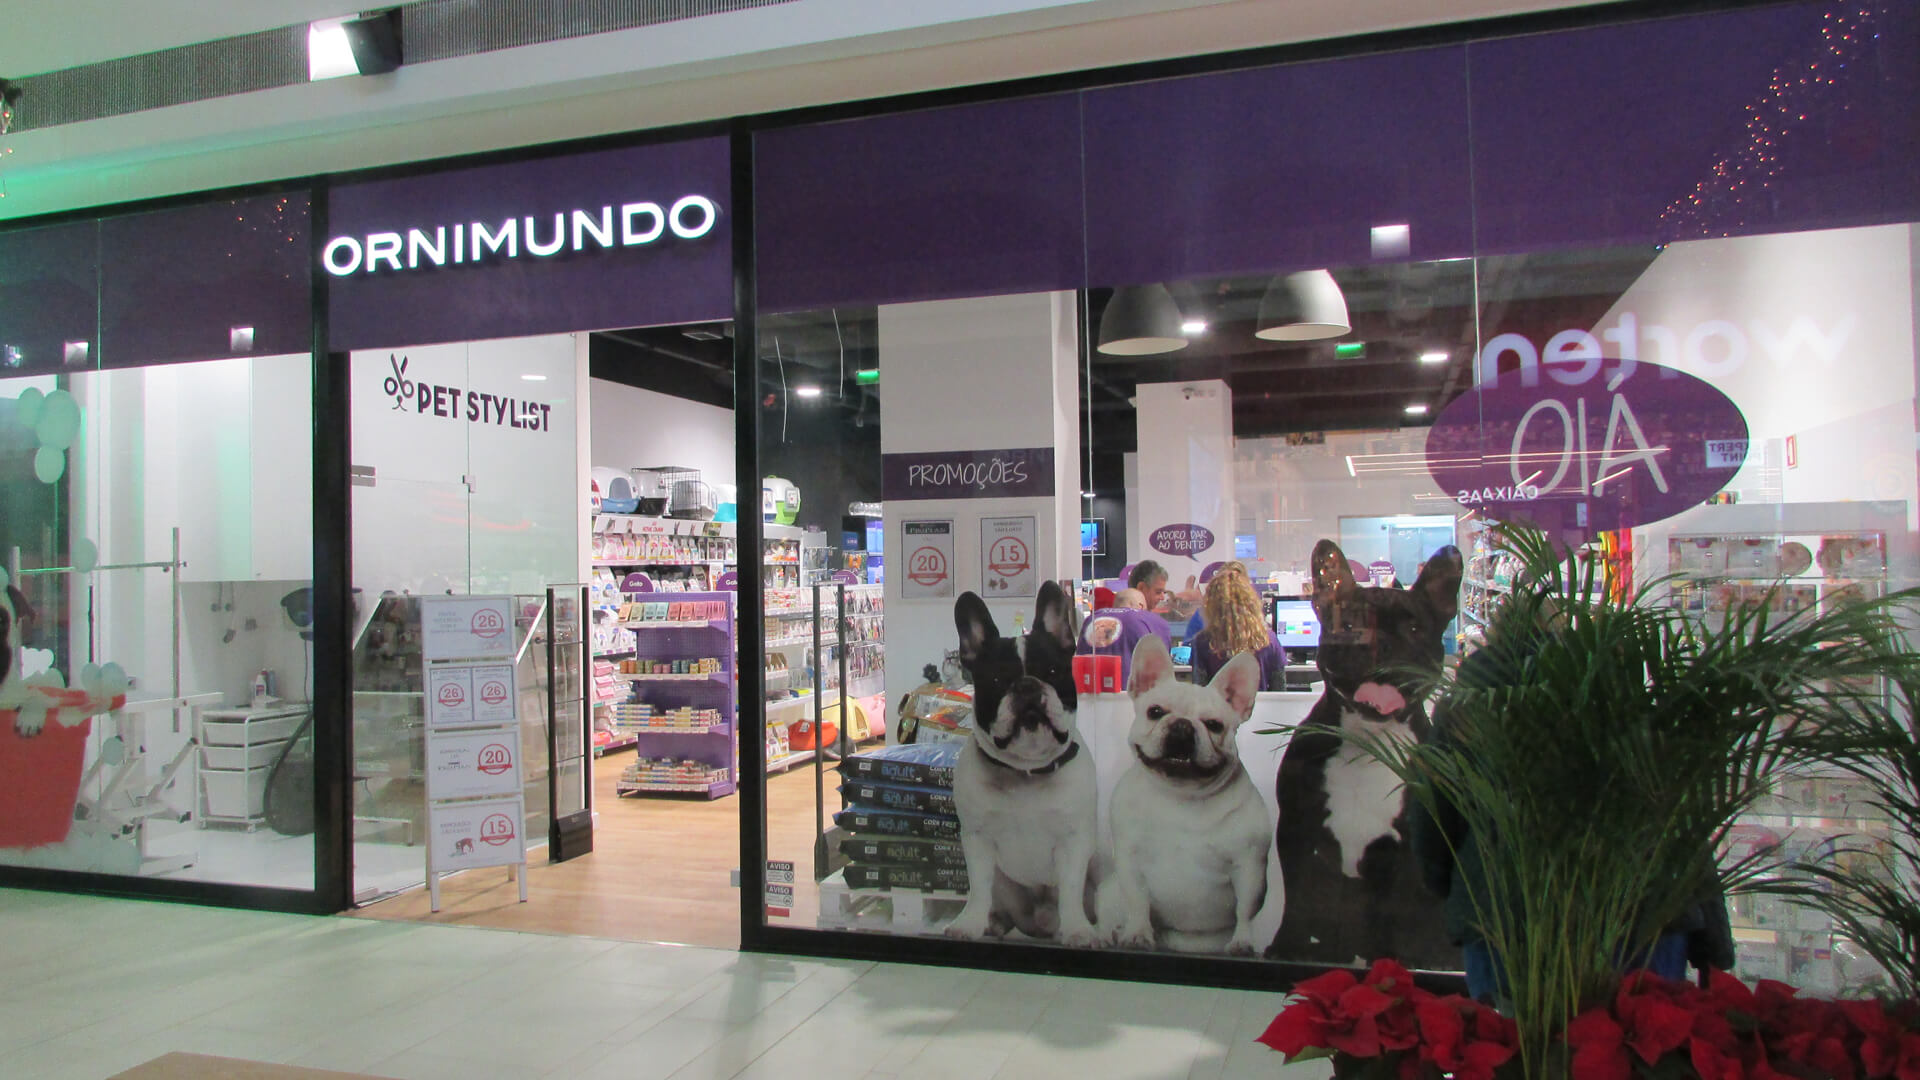 Iskaypet takes over Portuguese retailer Ornimundo